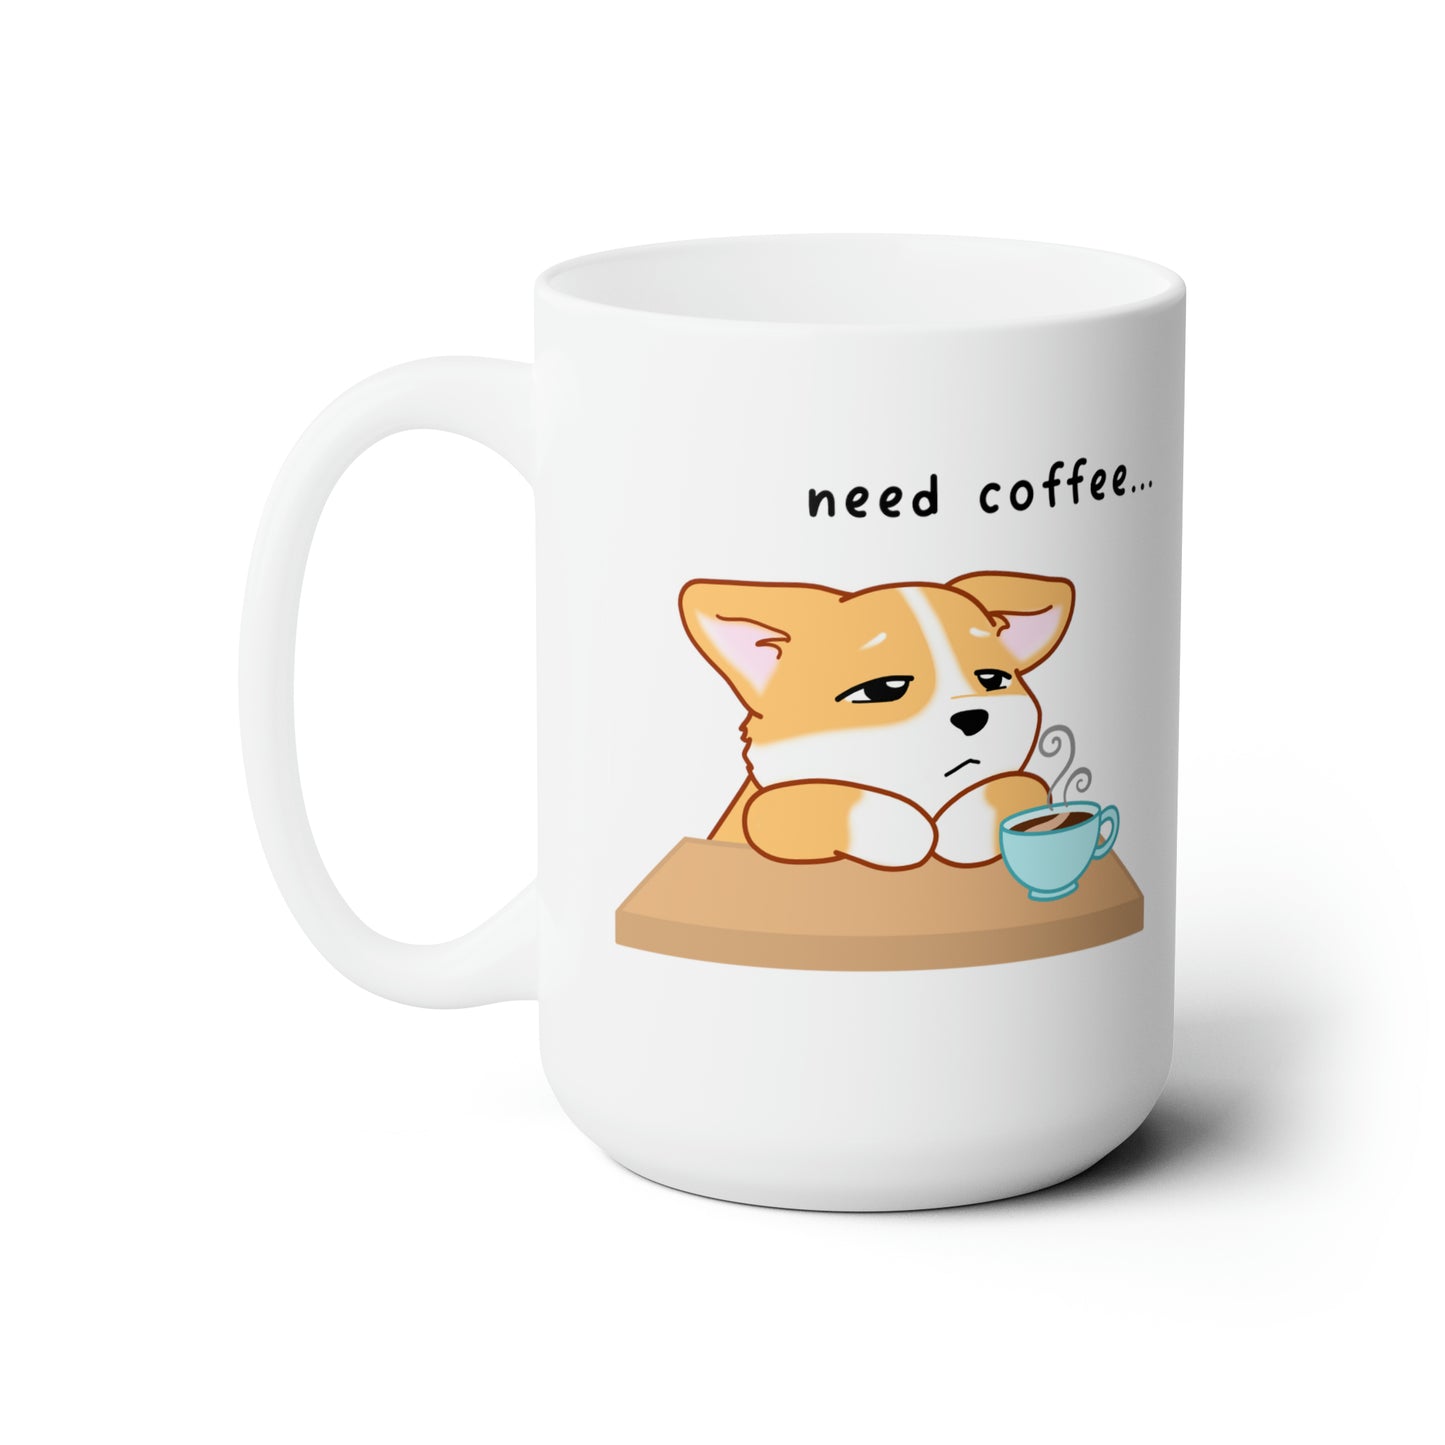 Corgi - Need Coffee - Large Single image - Ceramic Mug 15oz